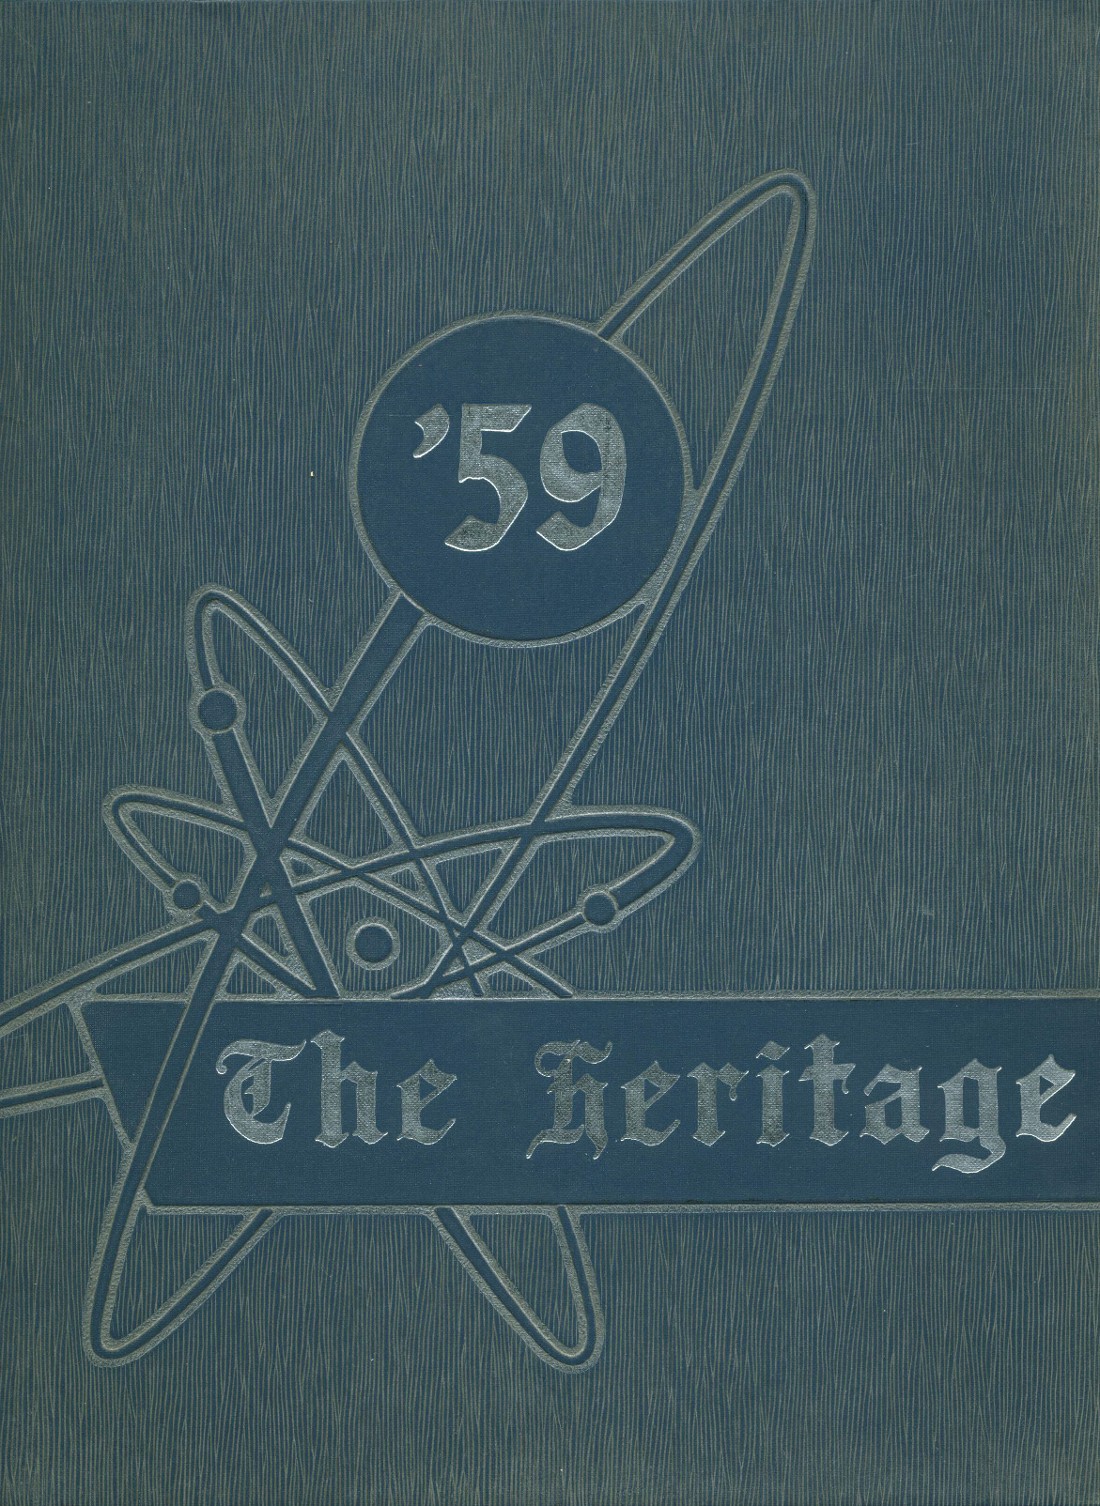 1959 yearbook from Ellsworth High School from Ellsworth, Kansas for sale